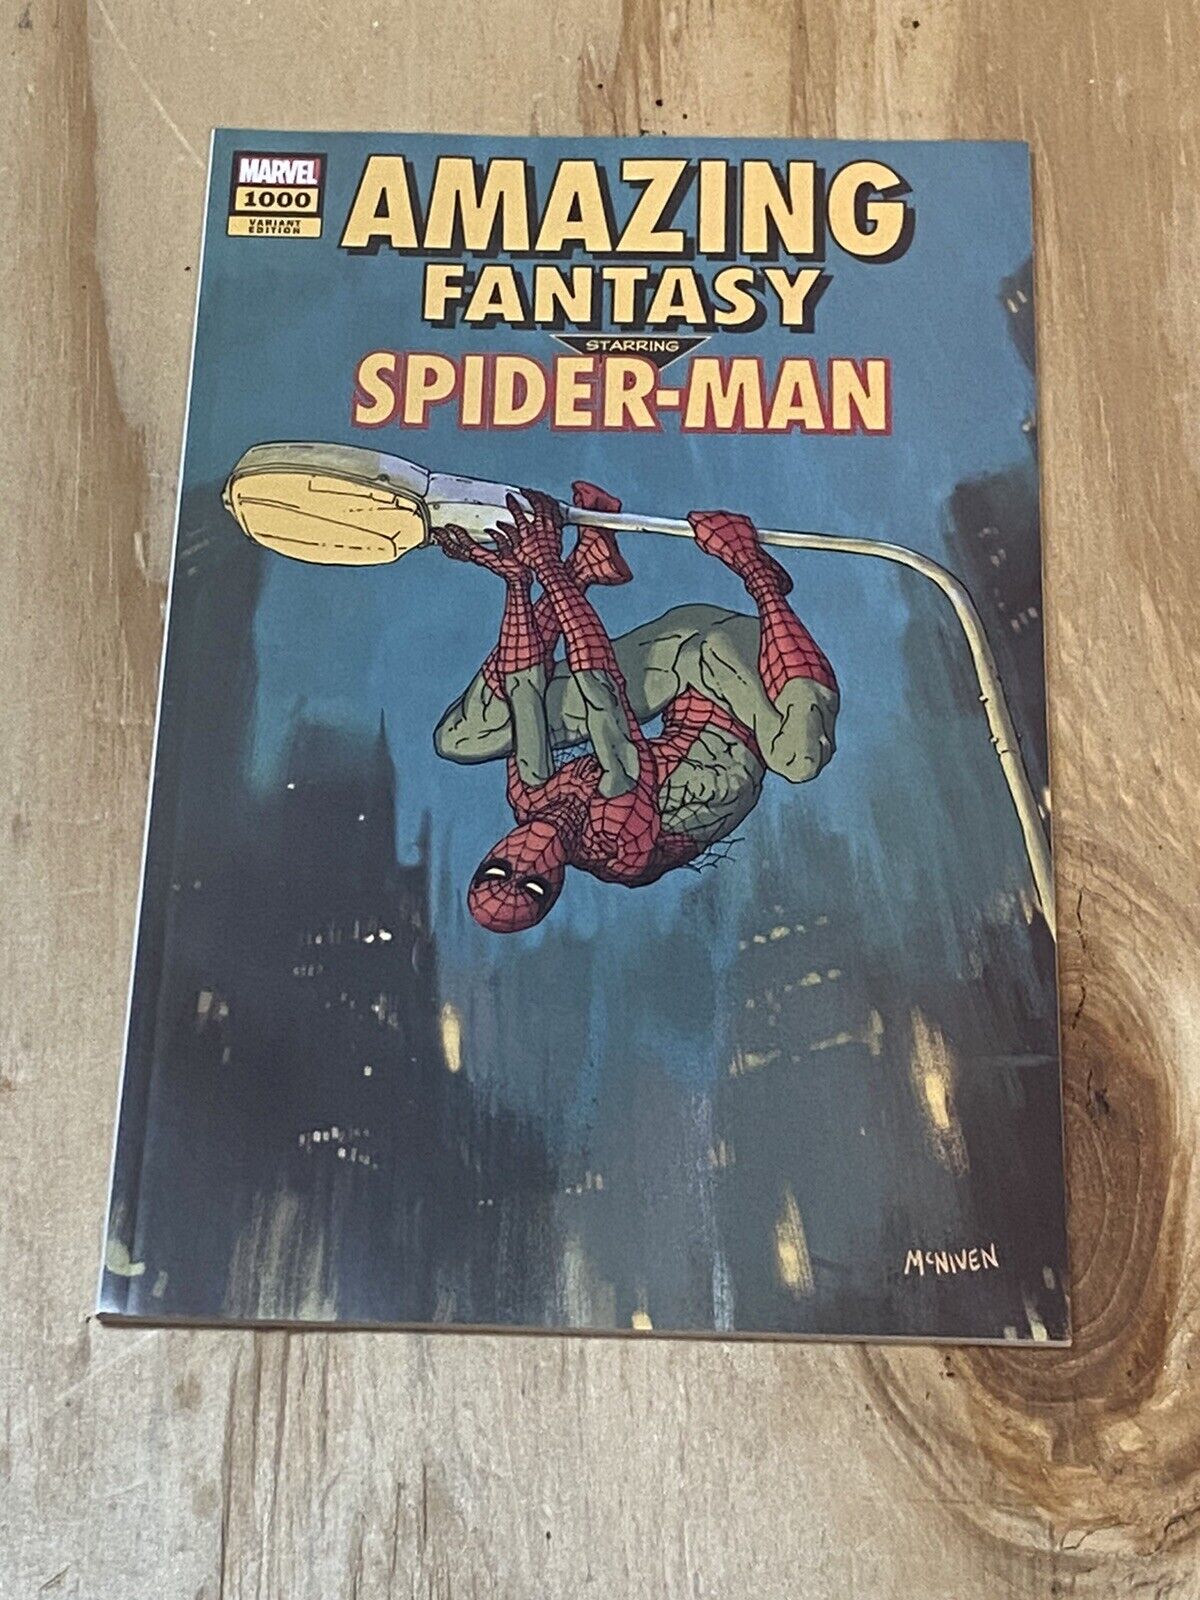 Amazing Fantasy #1000 Steve McNiven Variant-Spider-Man